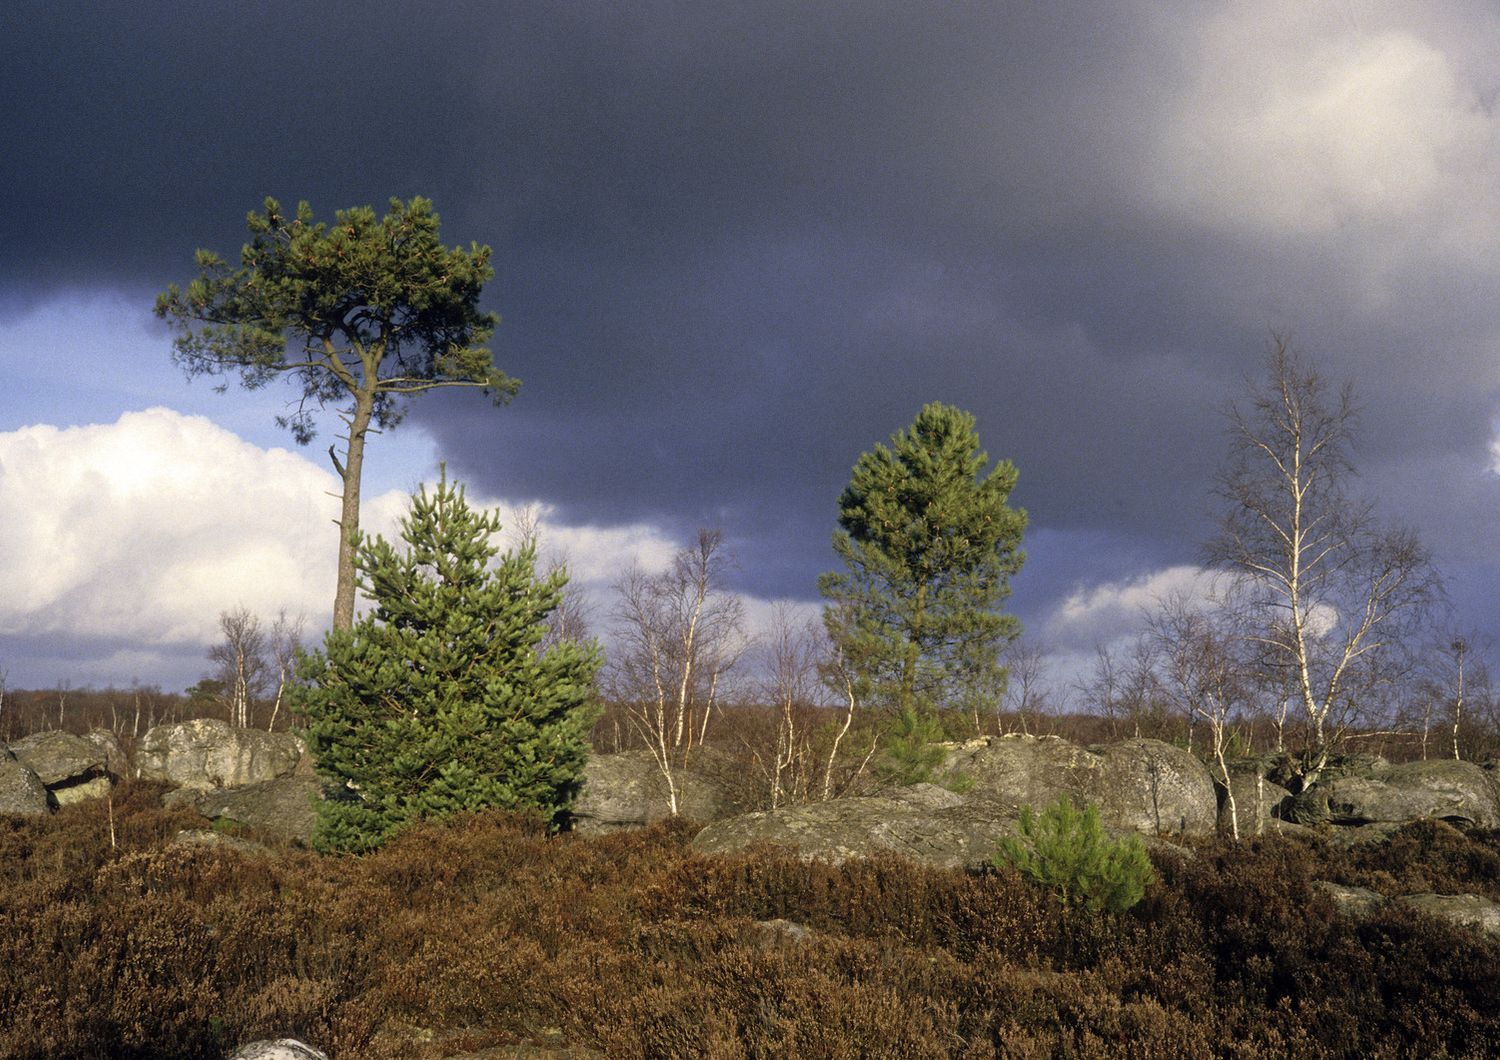 Aereo scarica kerosene su foresta Fontainebleau, polemica in Francia